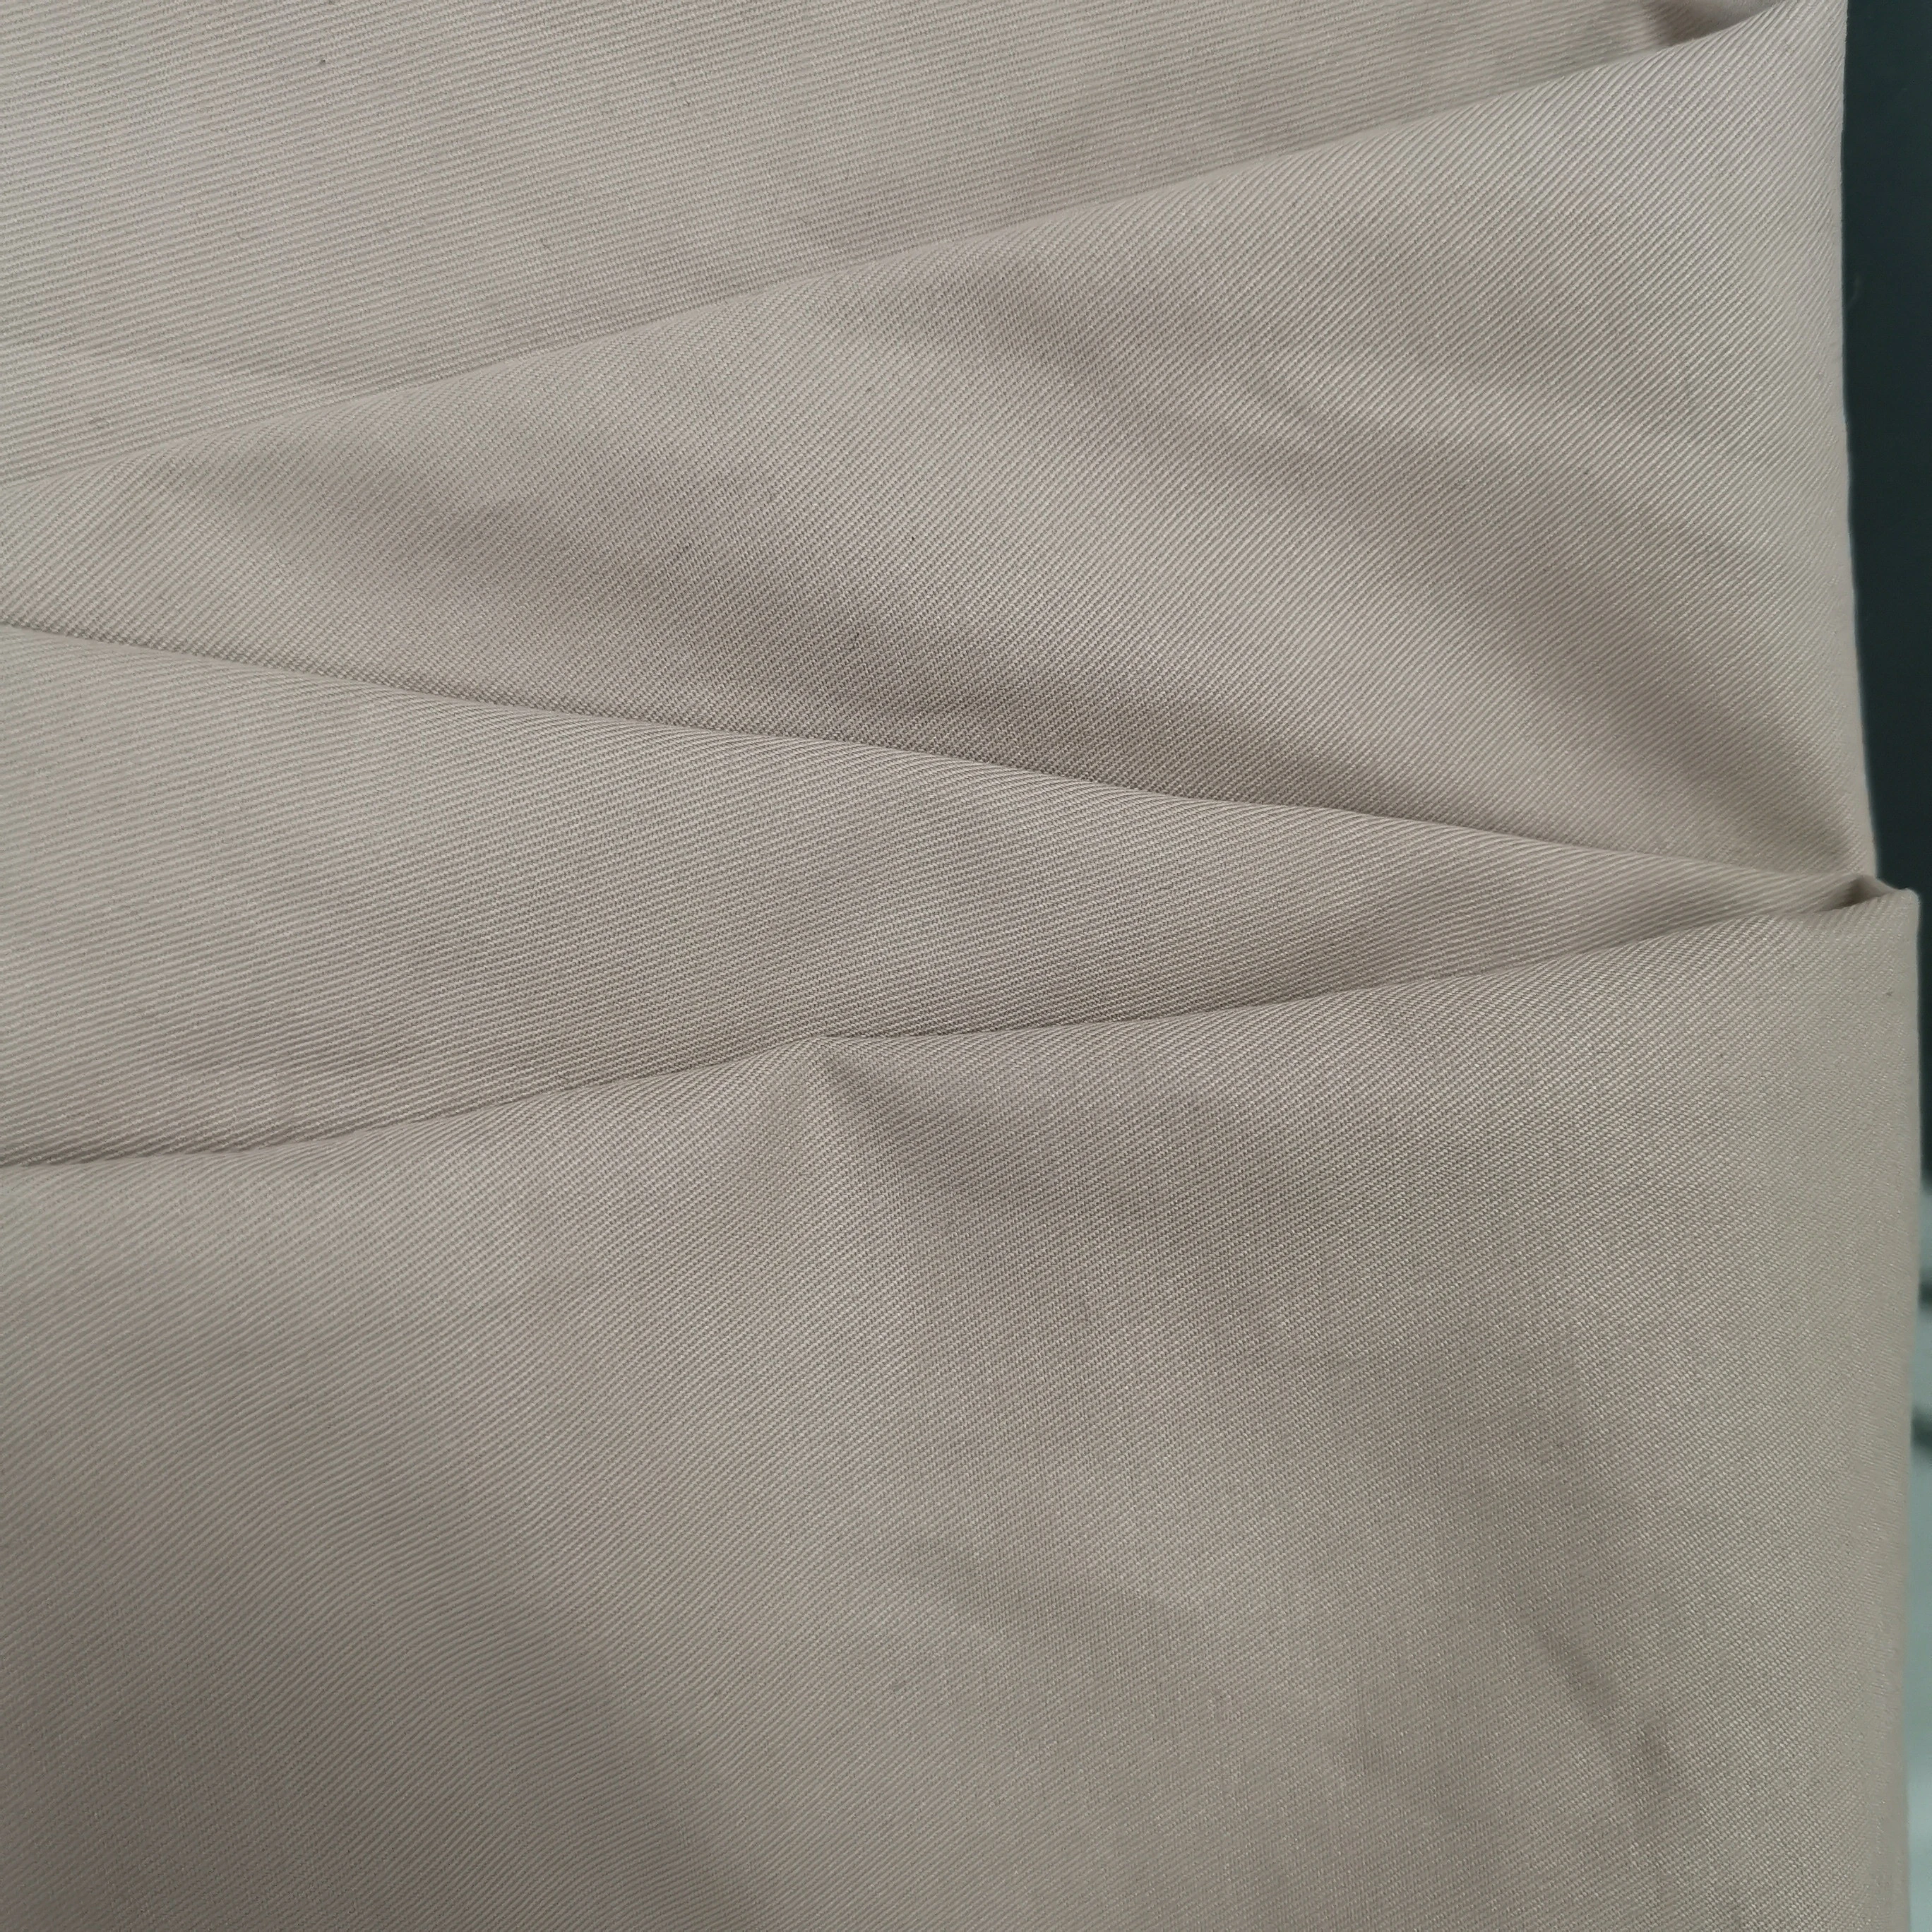 Cotton/Polyester/Nylon Mixed Woven Nylon Polyester Cotton Fabric